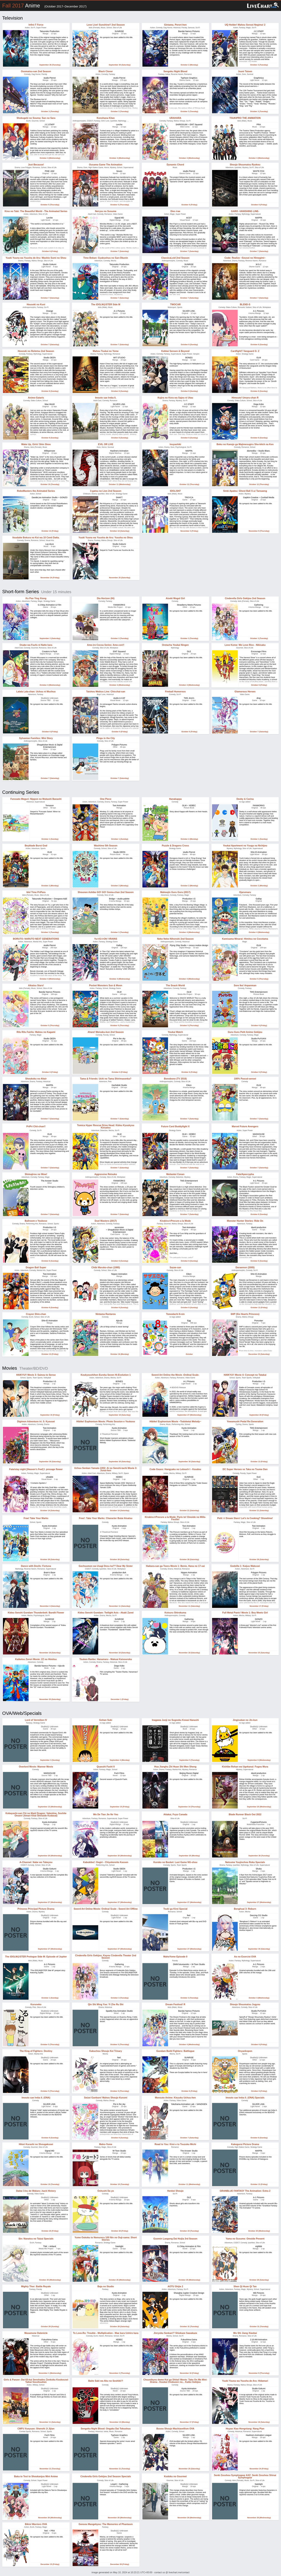 Fall 2017 Anime Chart - OVAs